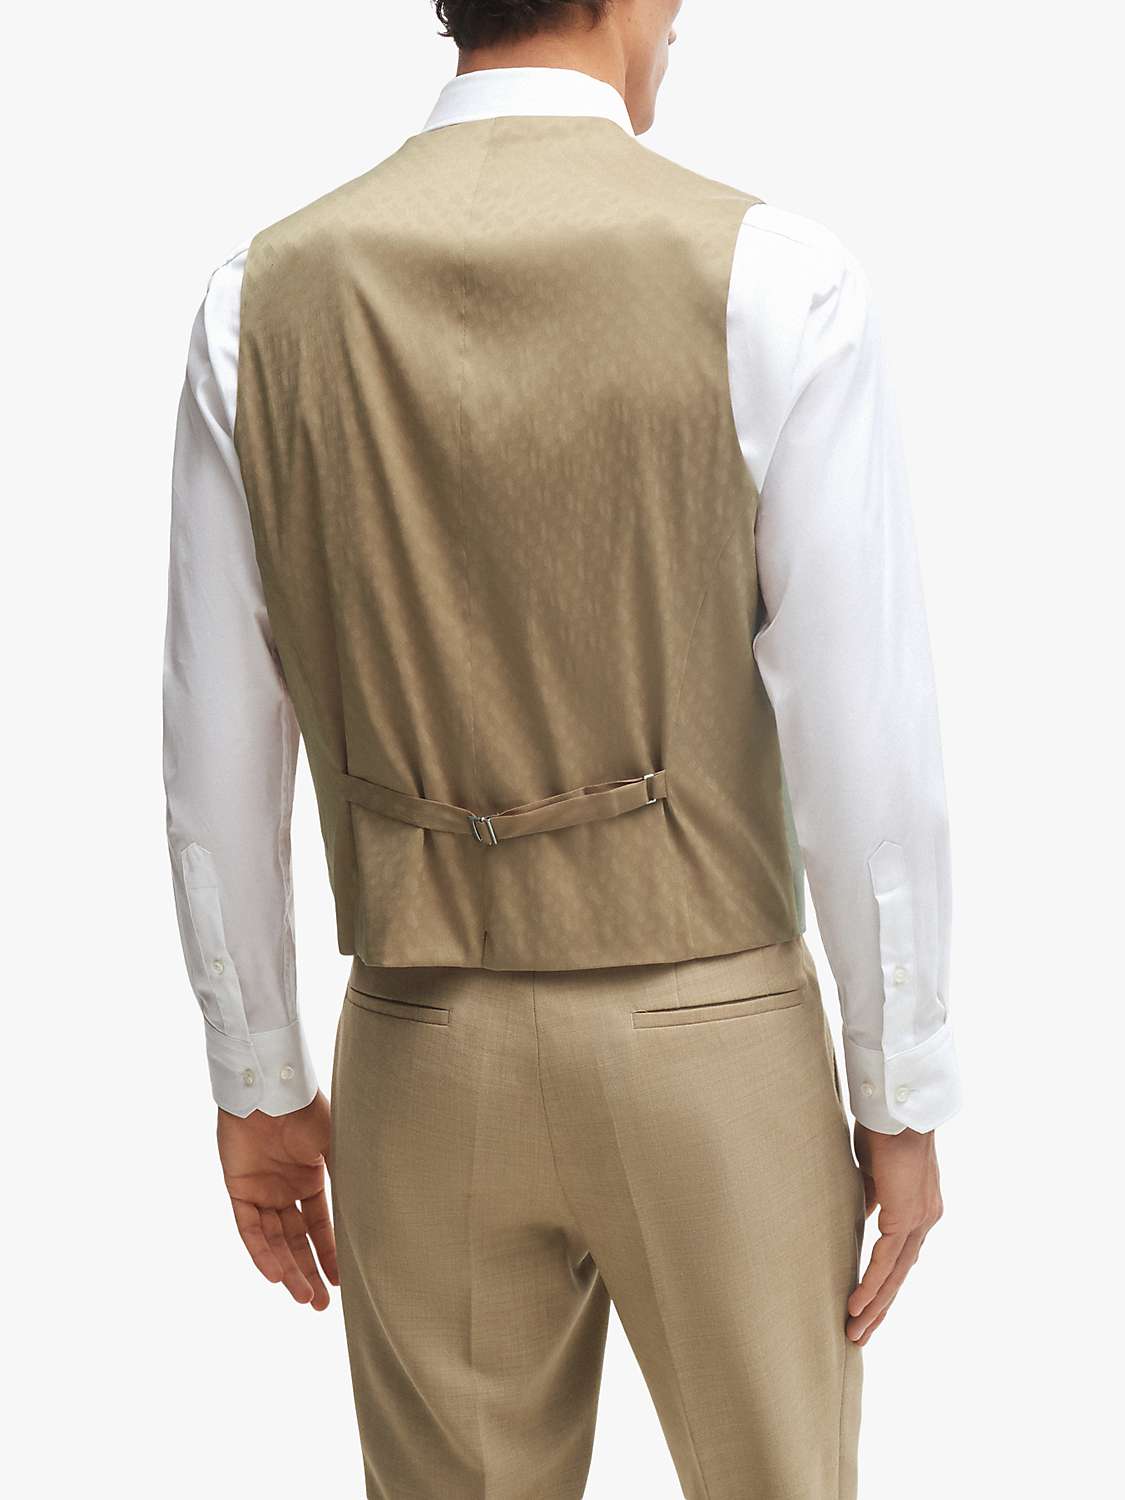 Buy BOSS Jasper Wool Blend Waistcoat, Medium Beige Online at johnlewis.com